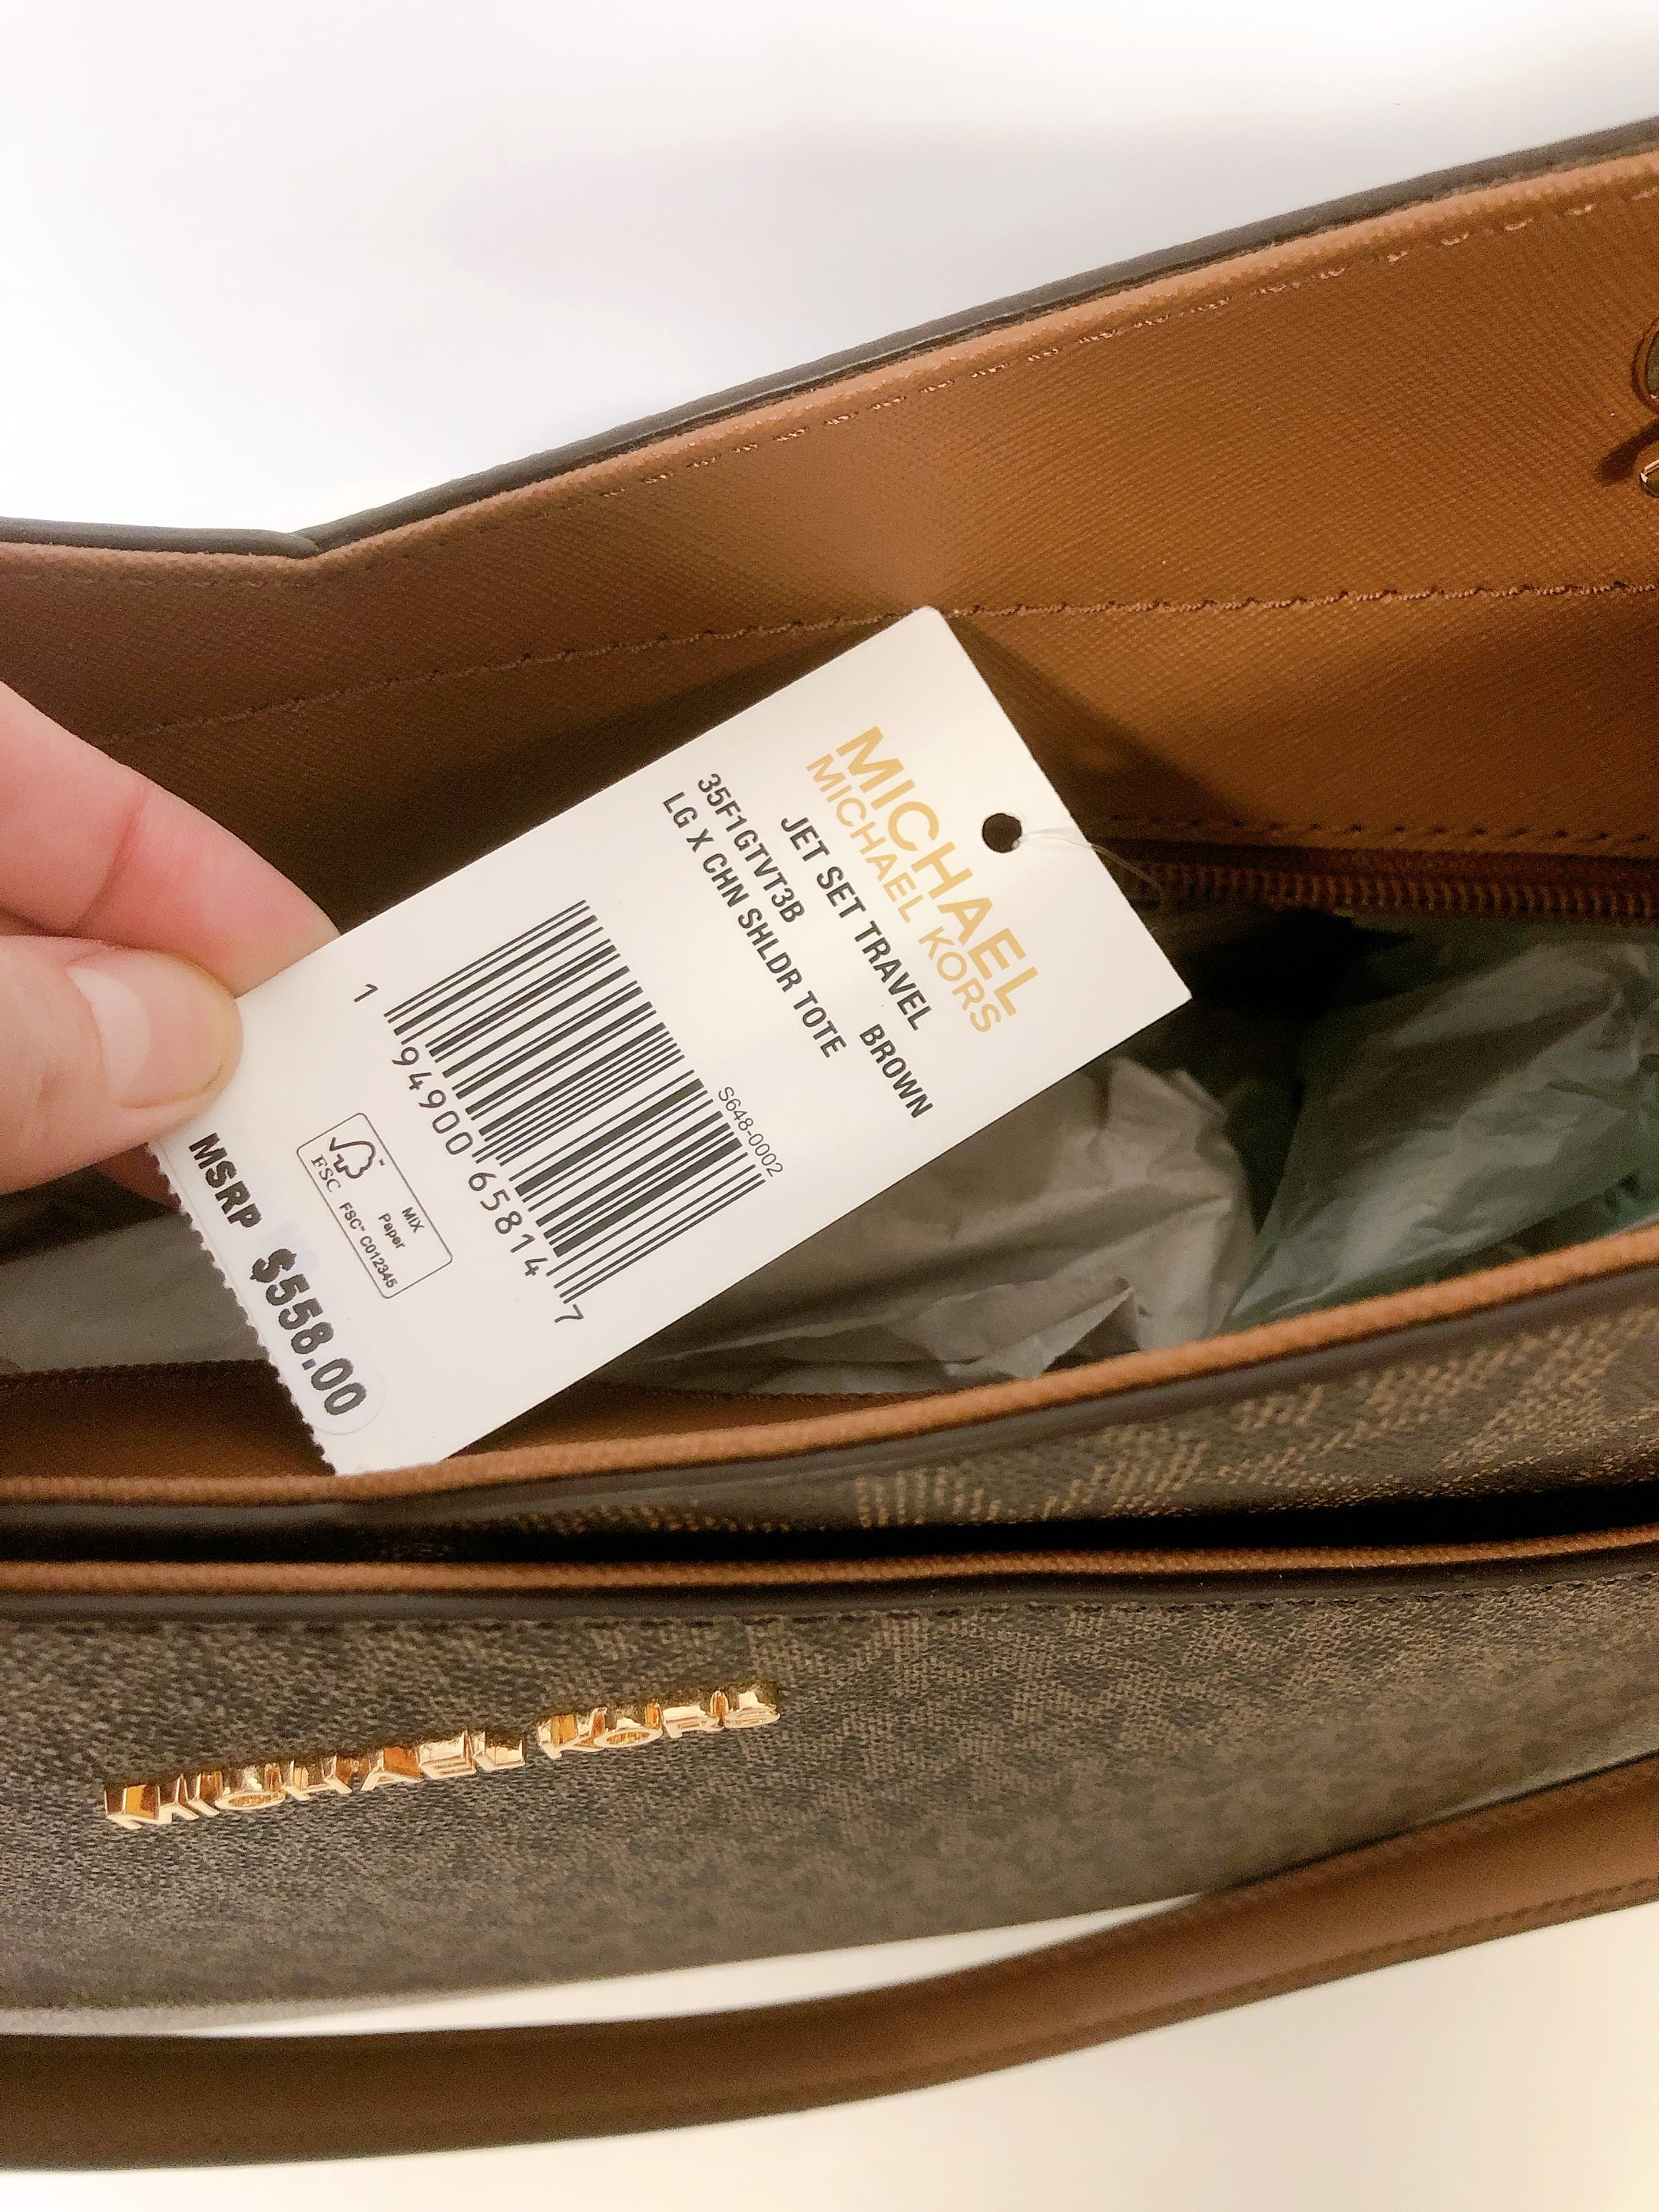 Michael Kors Jet Set Travel Saffiano Leather Medium Top Zip Multi-Function Tote  Bag in Black 38S1GTVT8L –